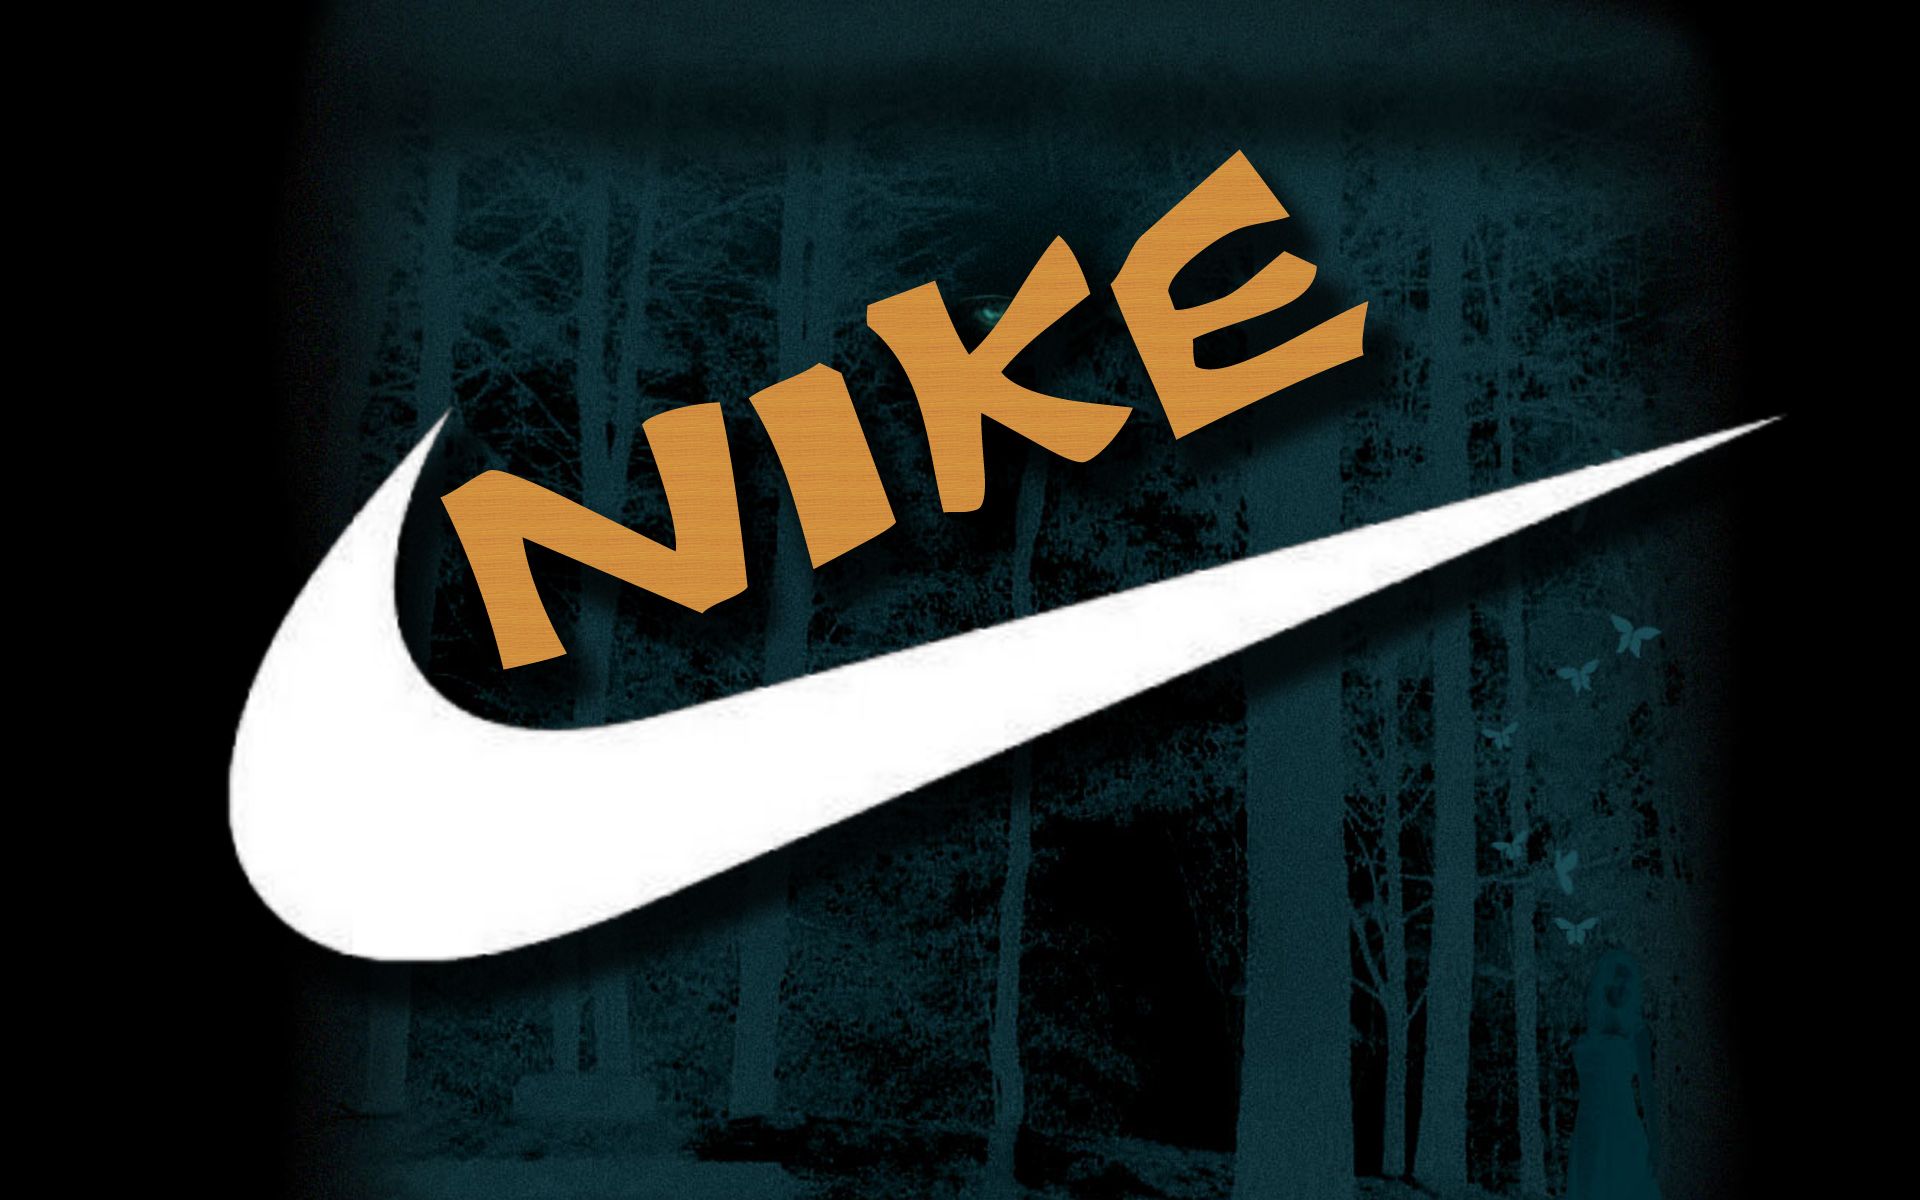 Cool Nike Basketball Logo Wallpapers on WallpaperDog